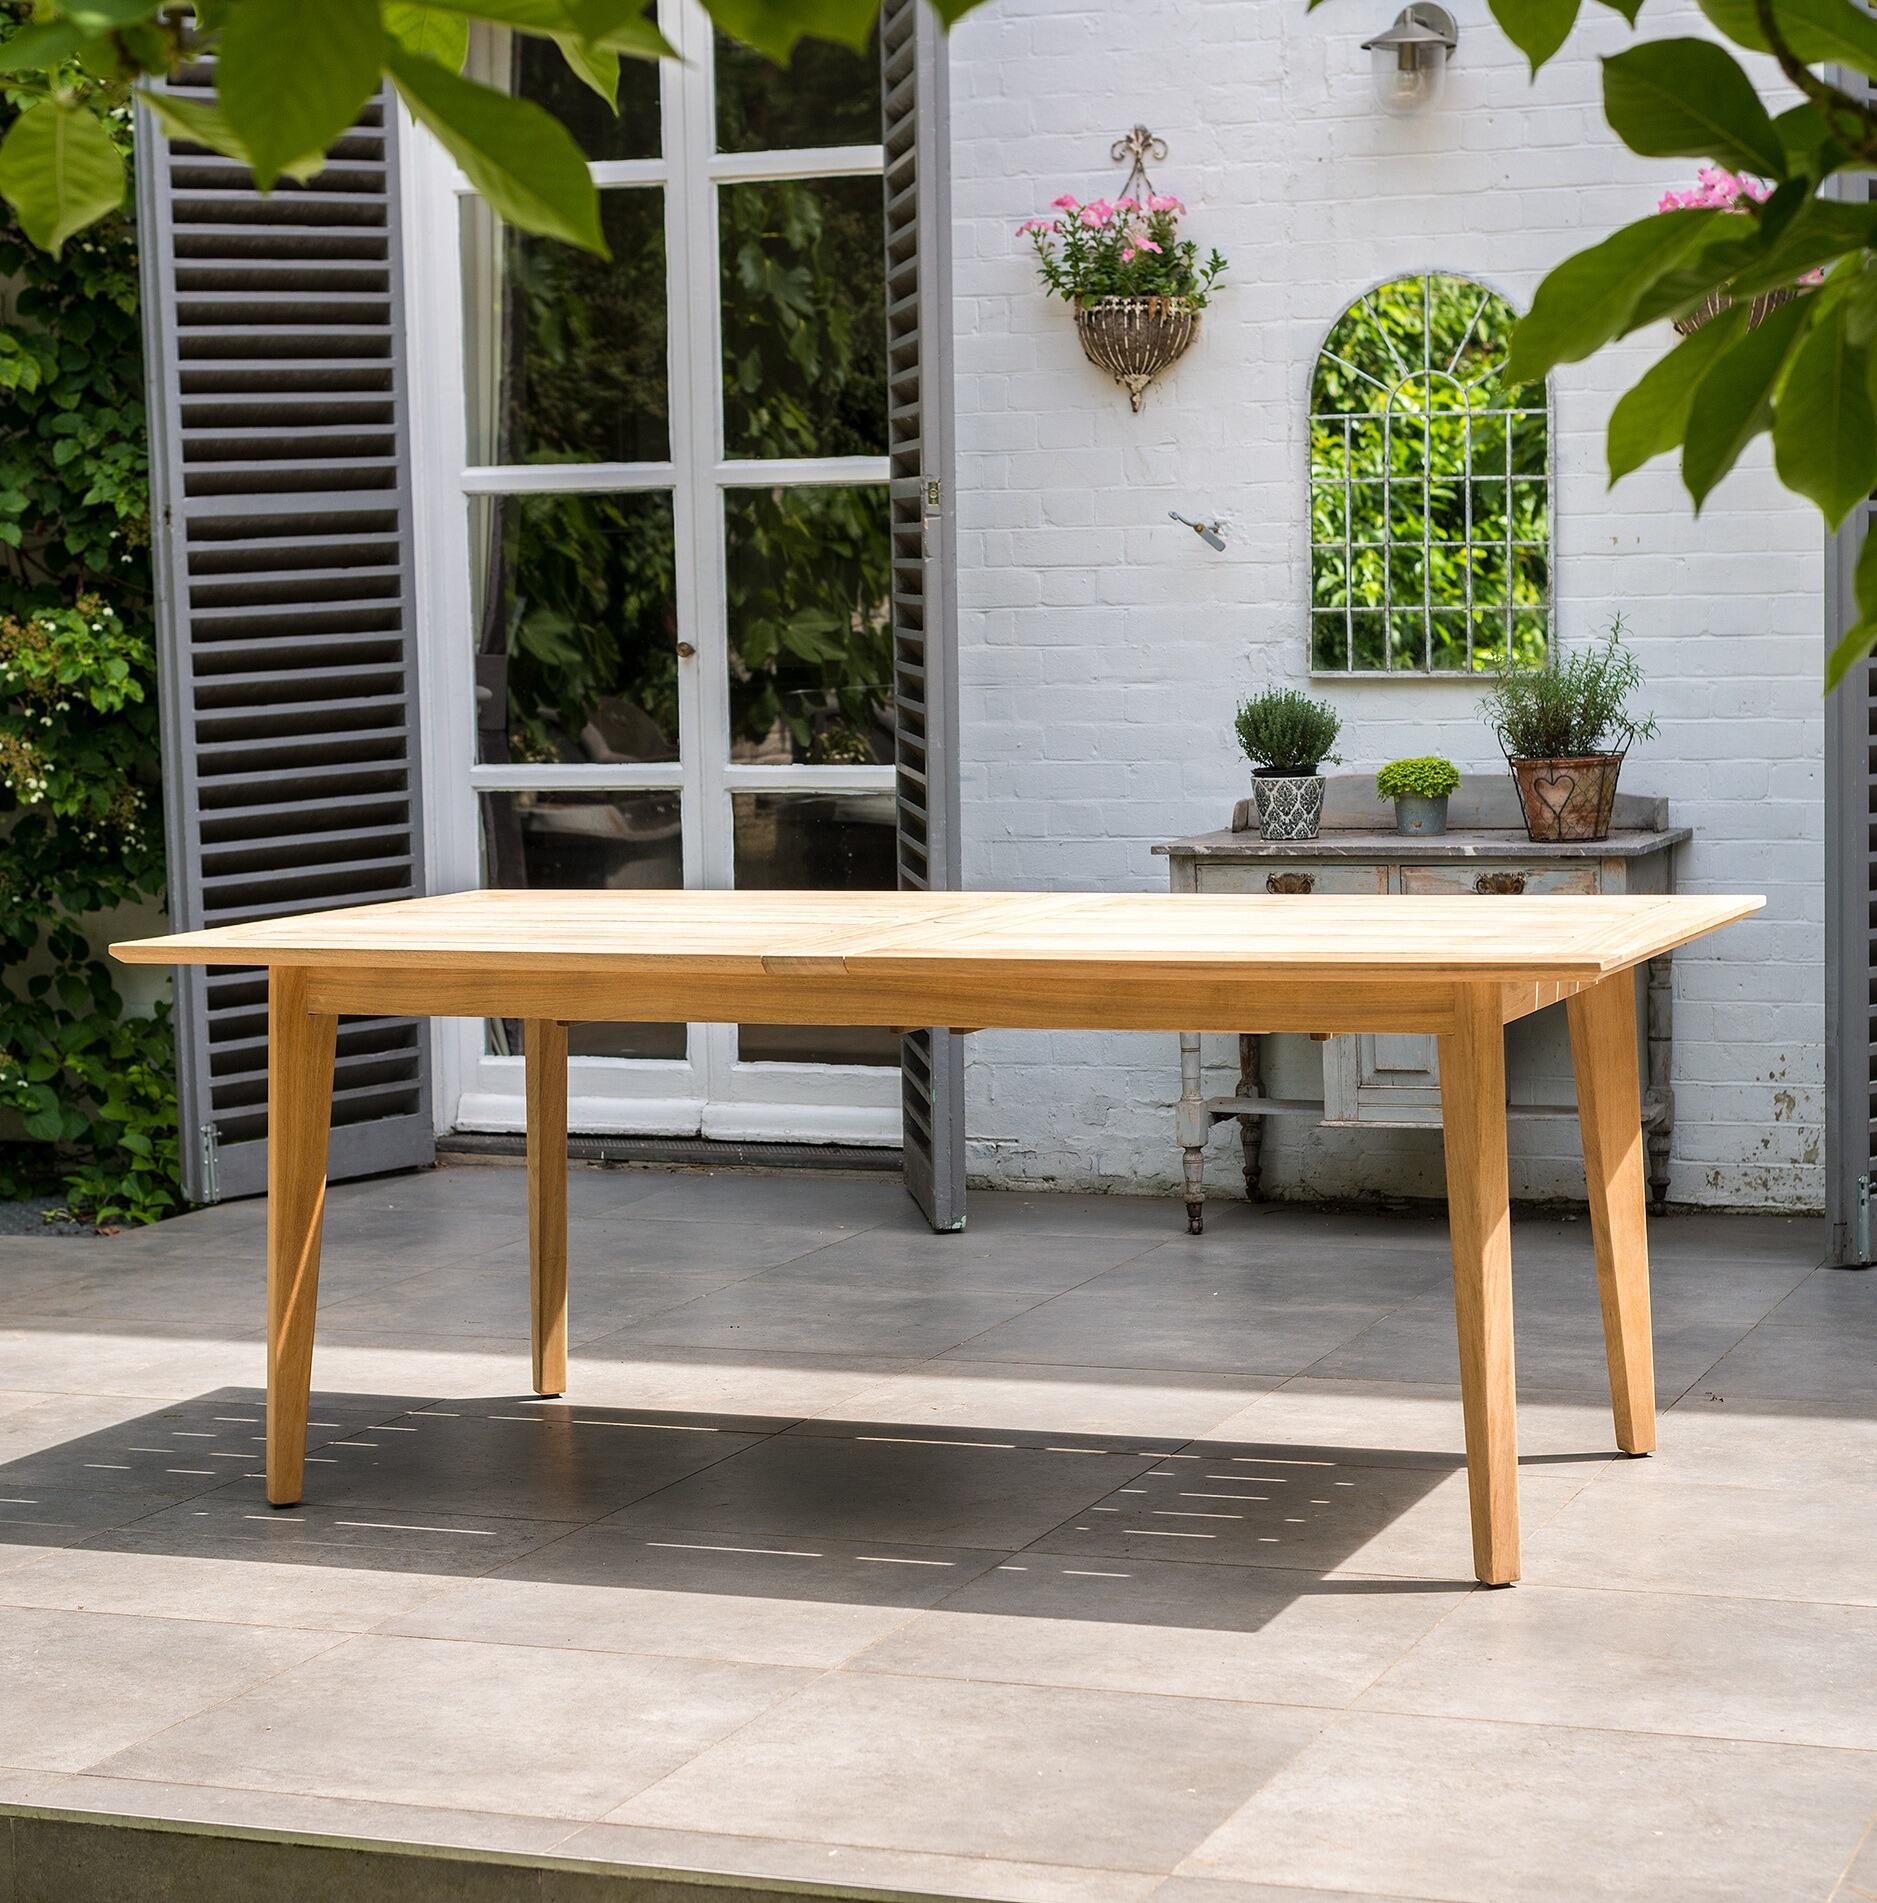 2 metre extending garden table modern outdoor dining roble hardwood